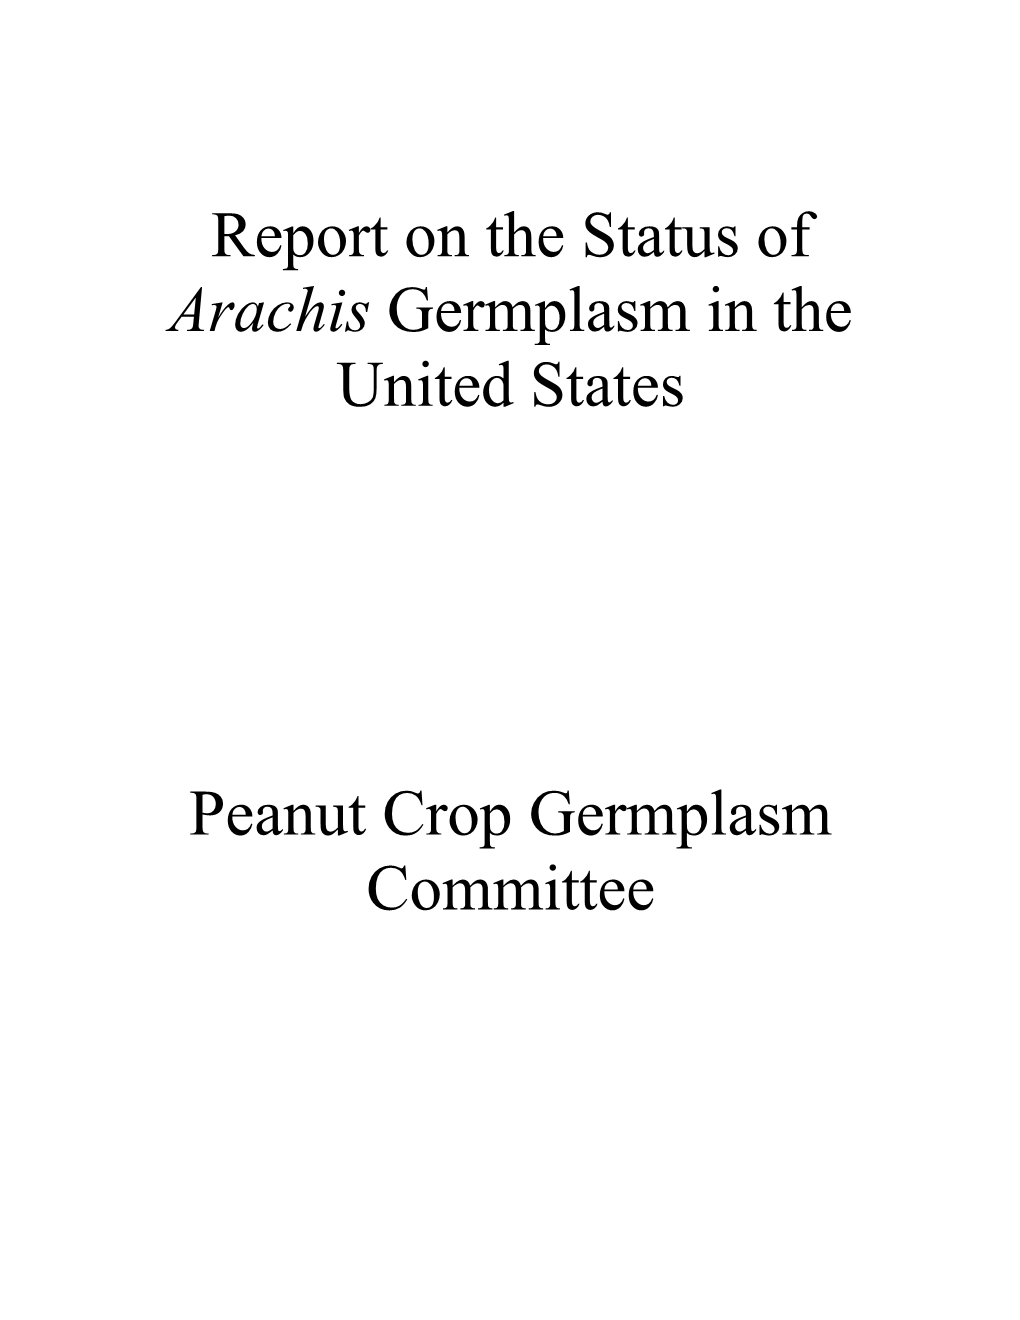 Report on the Status of Arachis Germplasm in the United States